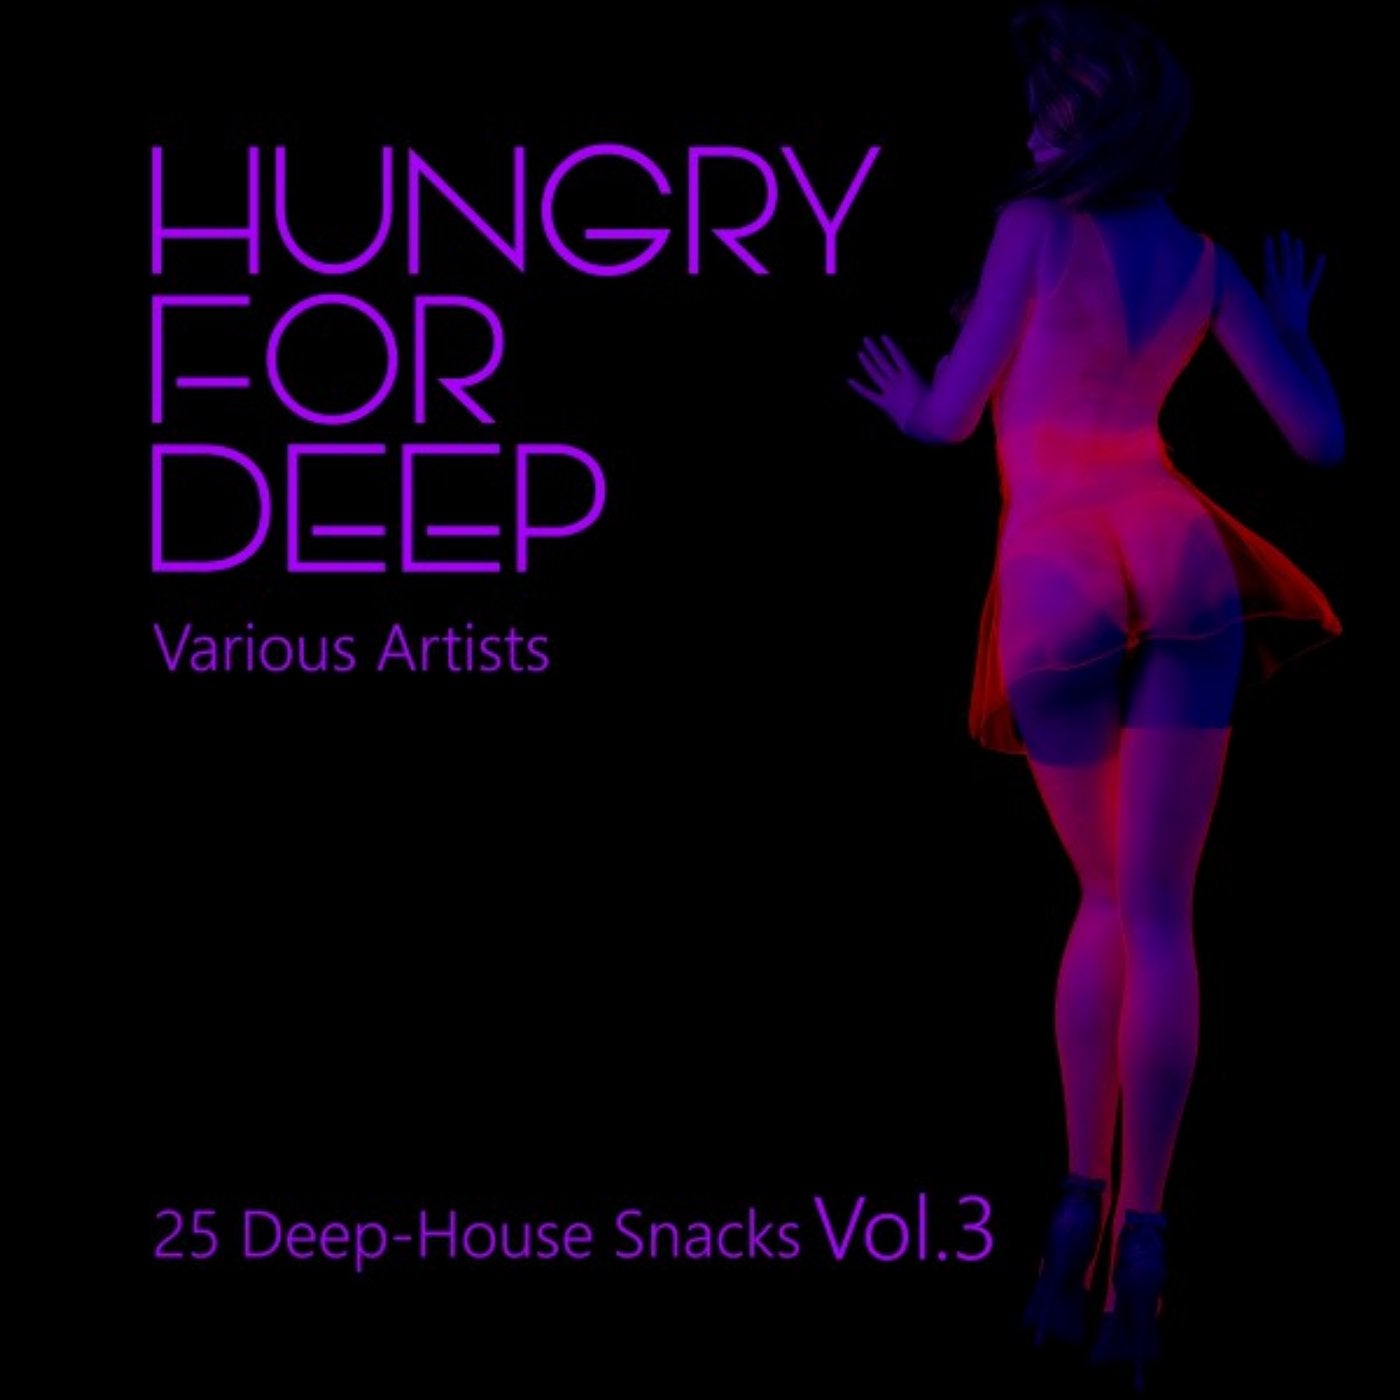 Hungry for Deep (25 Deep-House Snacks), Vol. 3